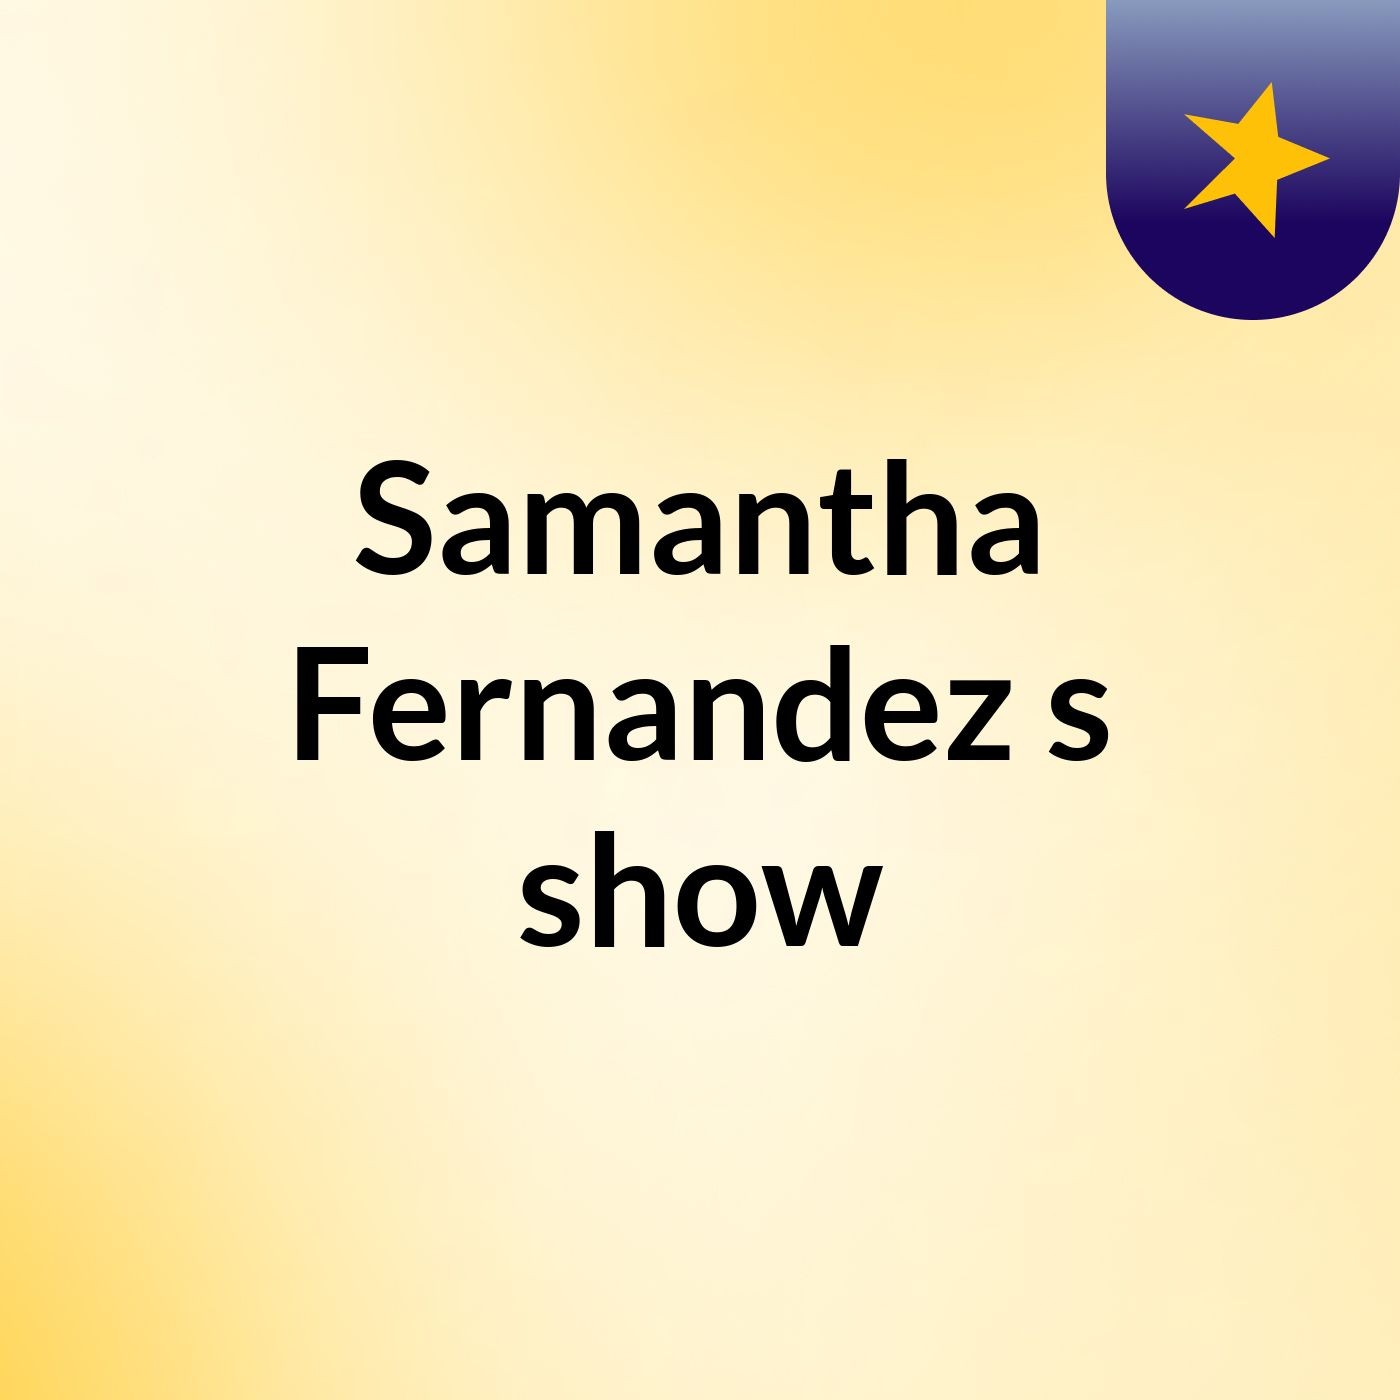 Samantha Fernandez's show